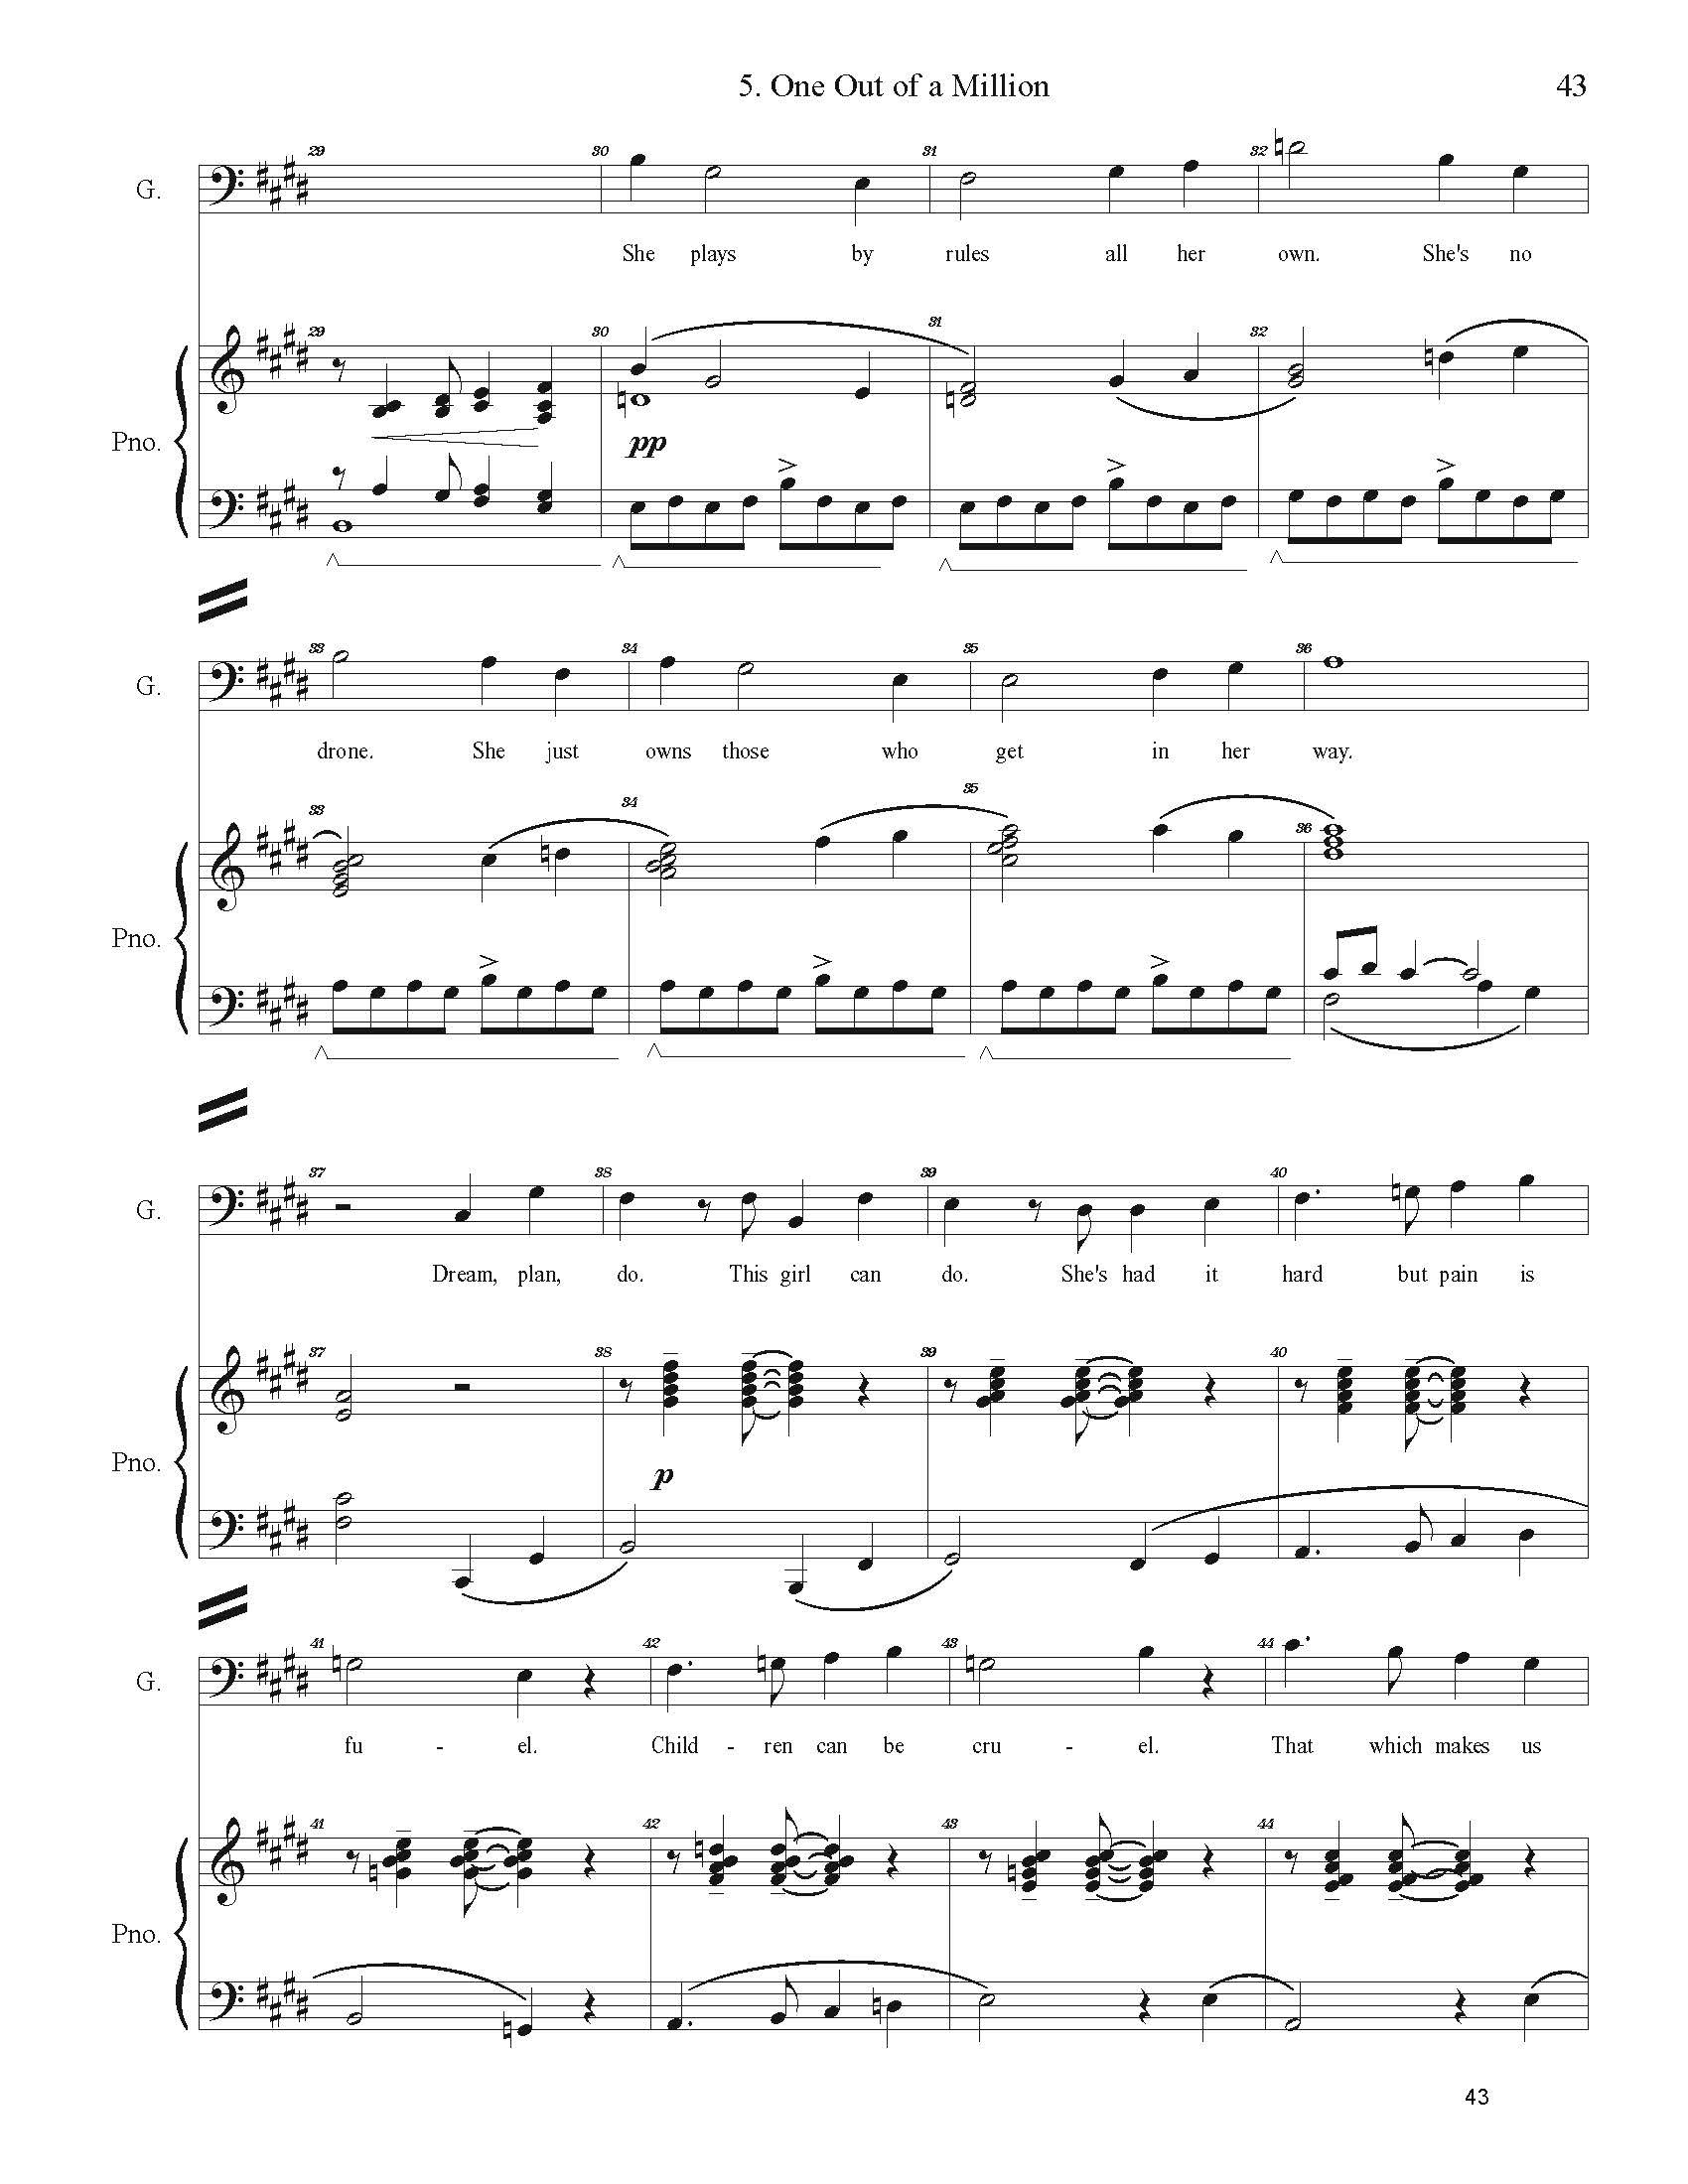 FULL PIANO VOCAL SCORE DRAFT 1 - Score_Page_043.jpg